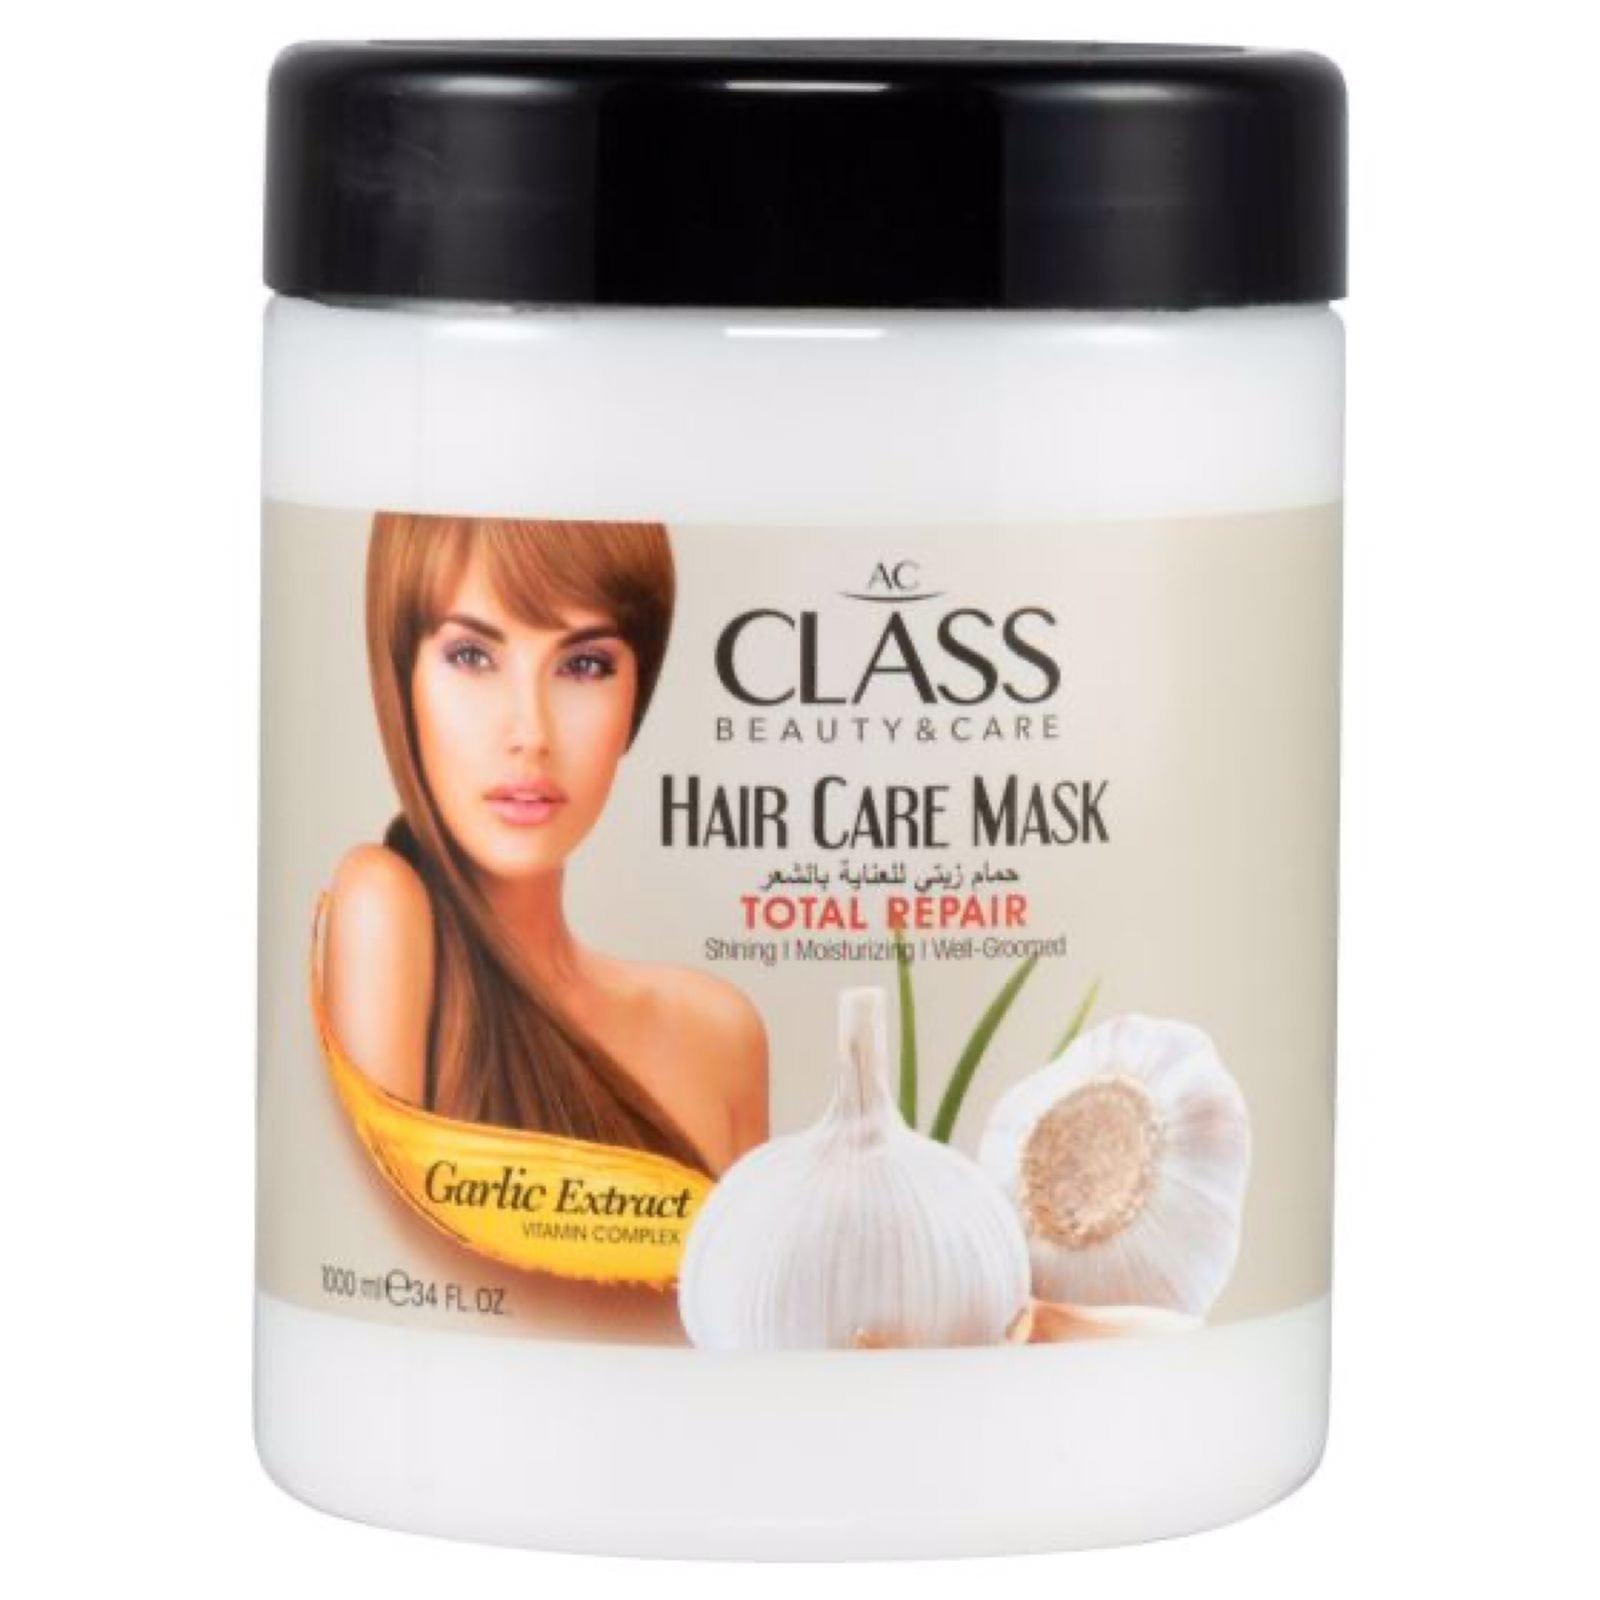 Redist AC Class Hair Care Mask Garlic Extract 1000ml